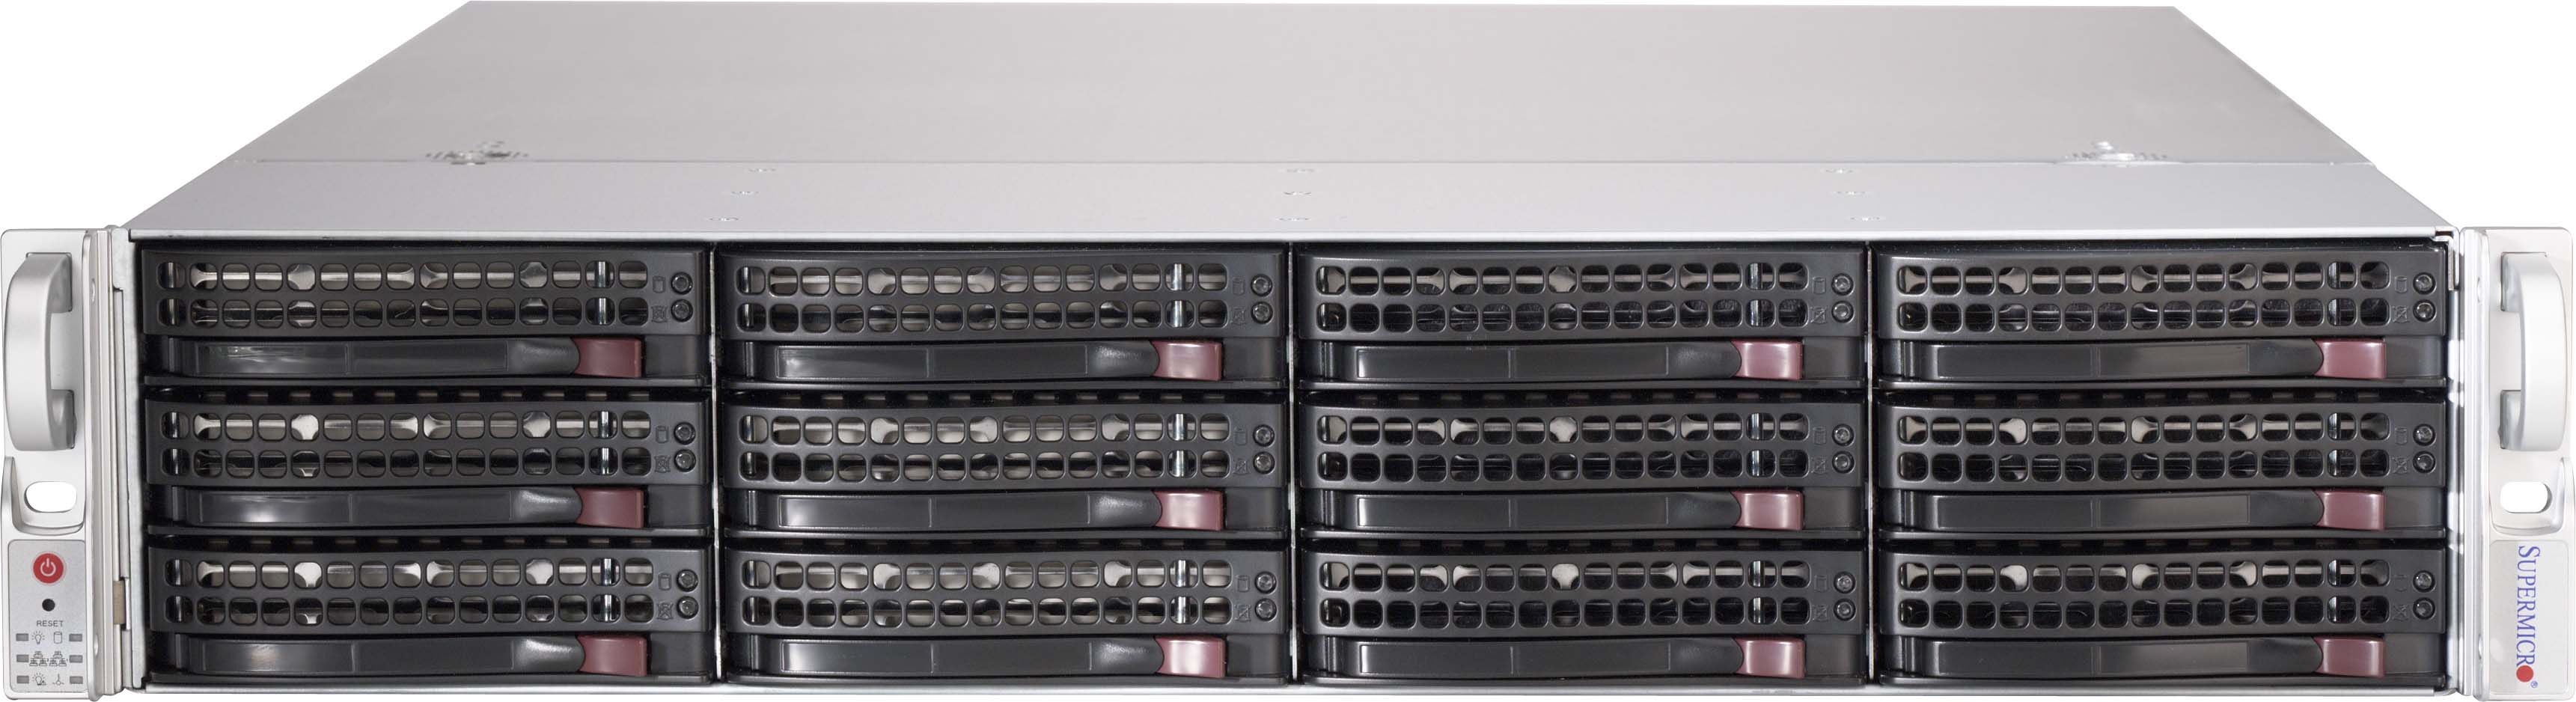 Server Case SuperMicro CSE-826BE2C-R741JBOD, 2x740Вт